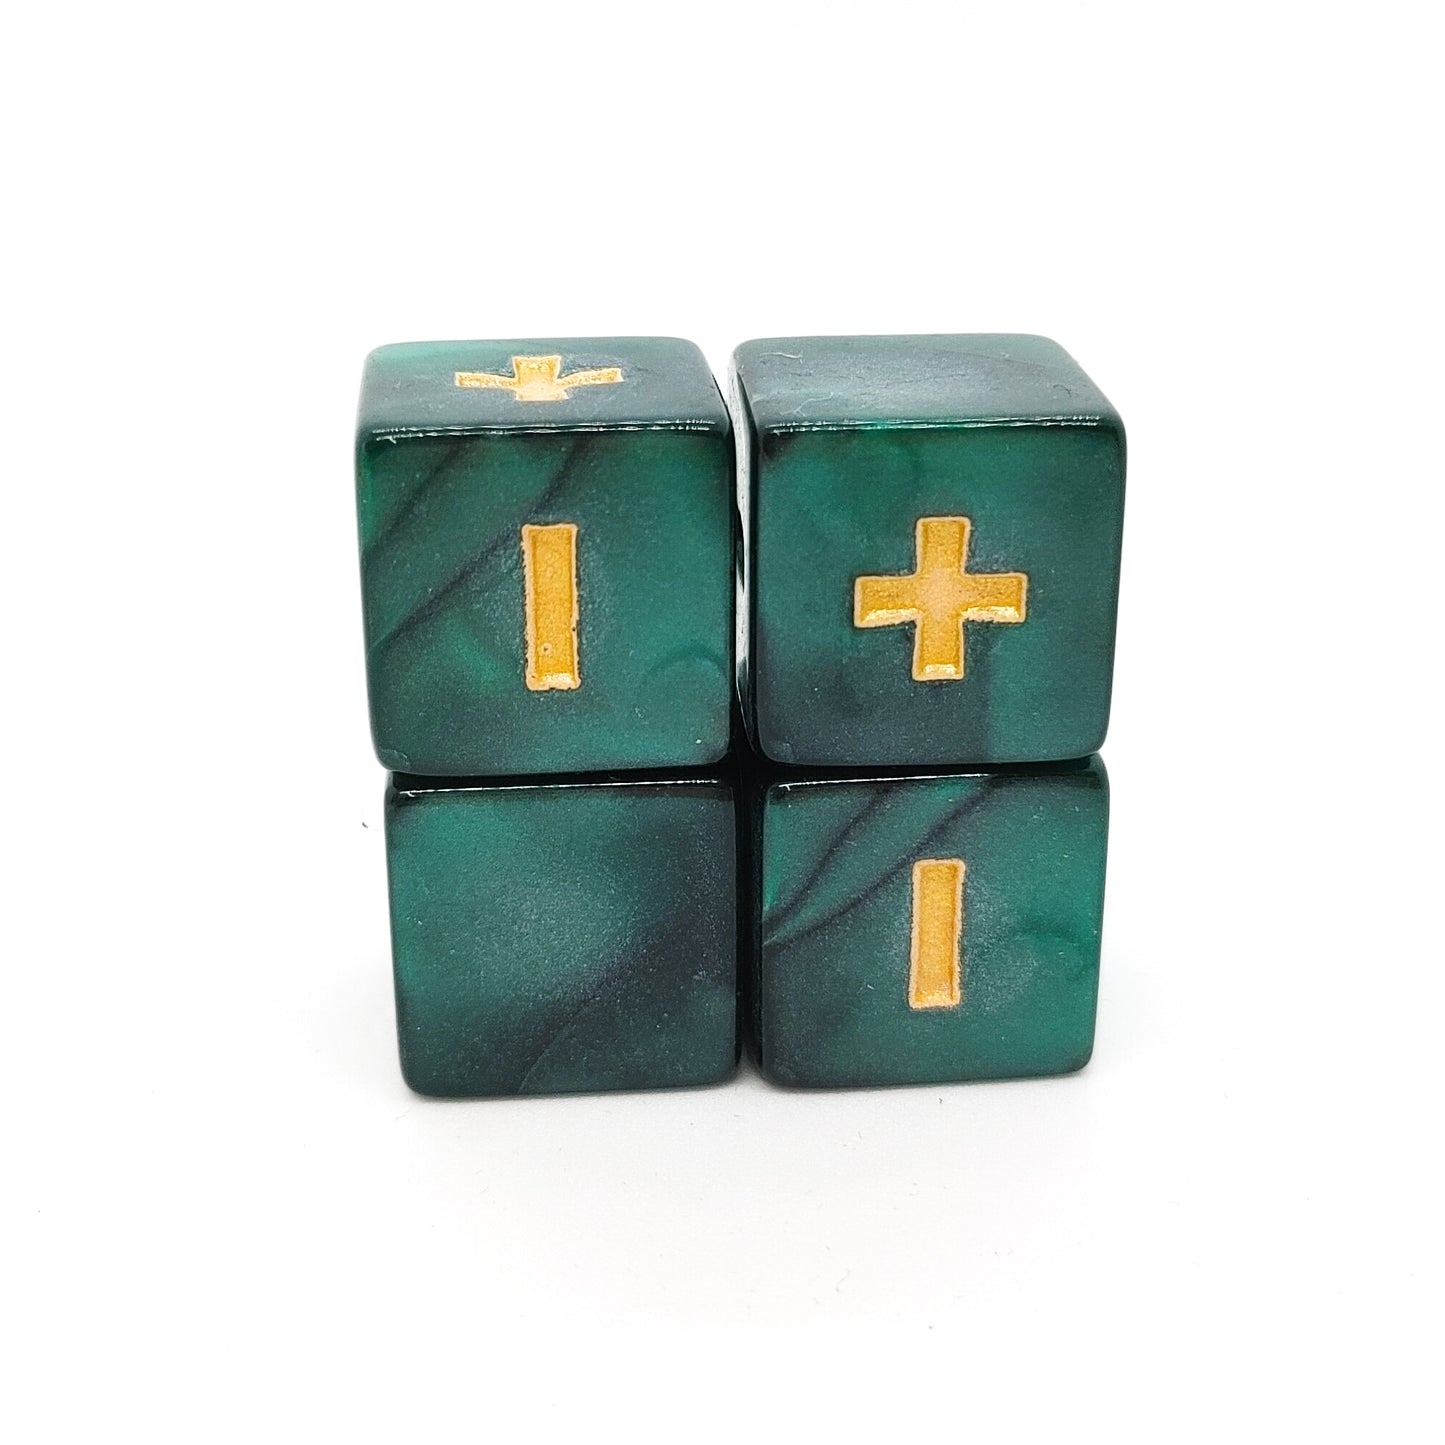 Bright & Vibrant - 4-piece Fudge dice set